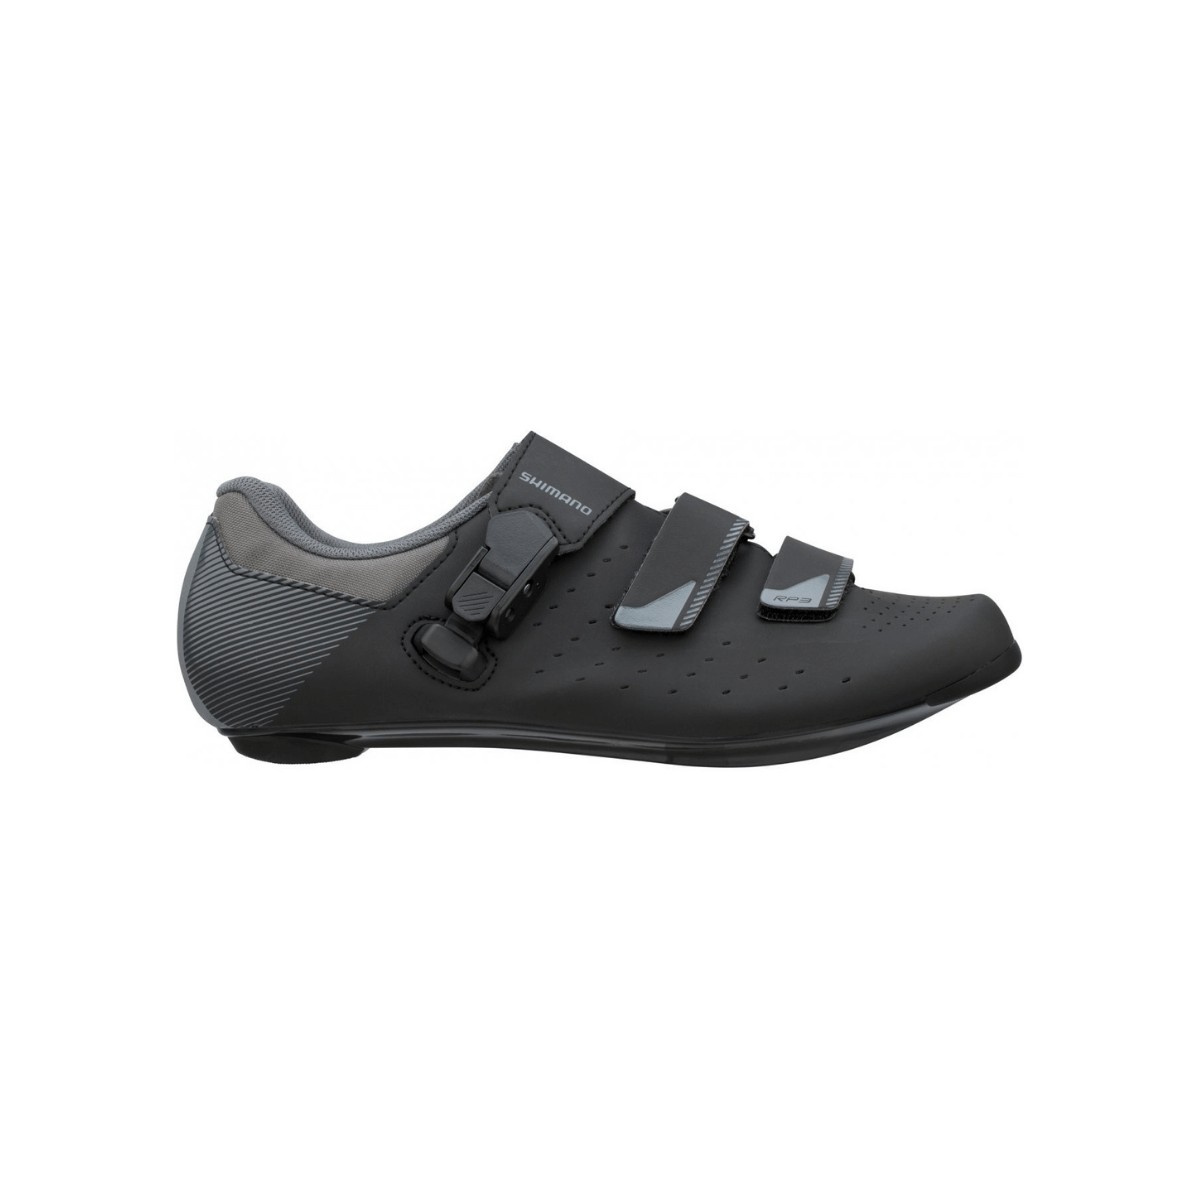 Shimano RP301 Road Shoes Black Gray, Size 41 - EUR